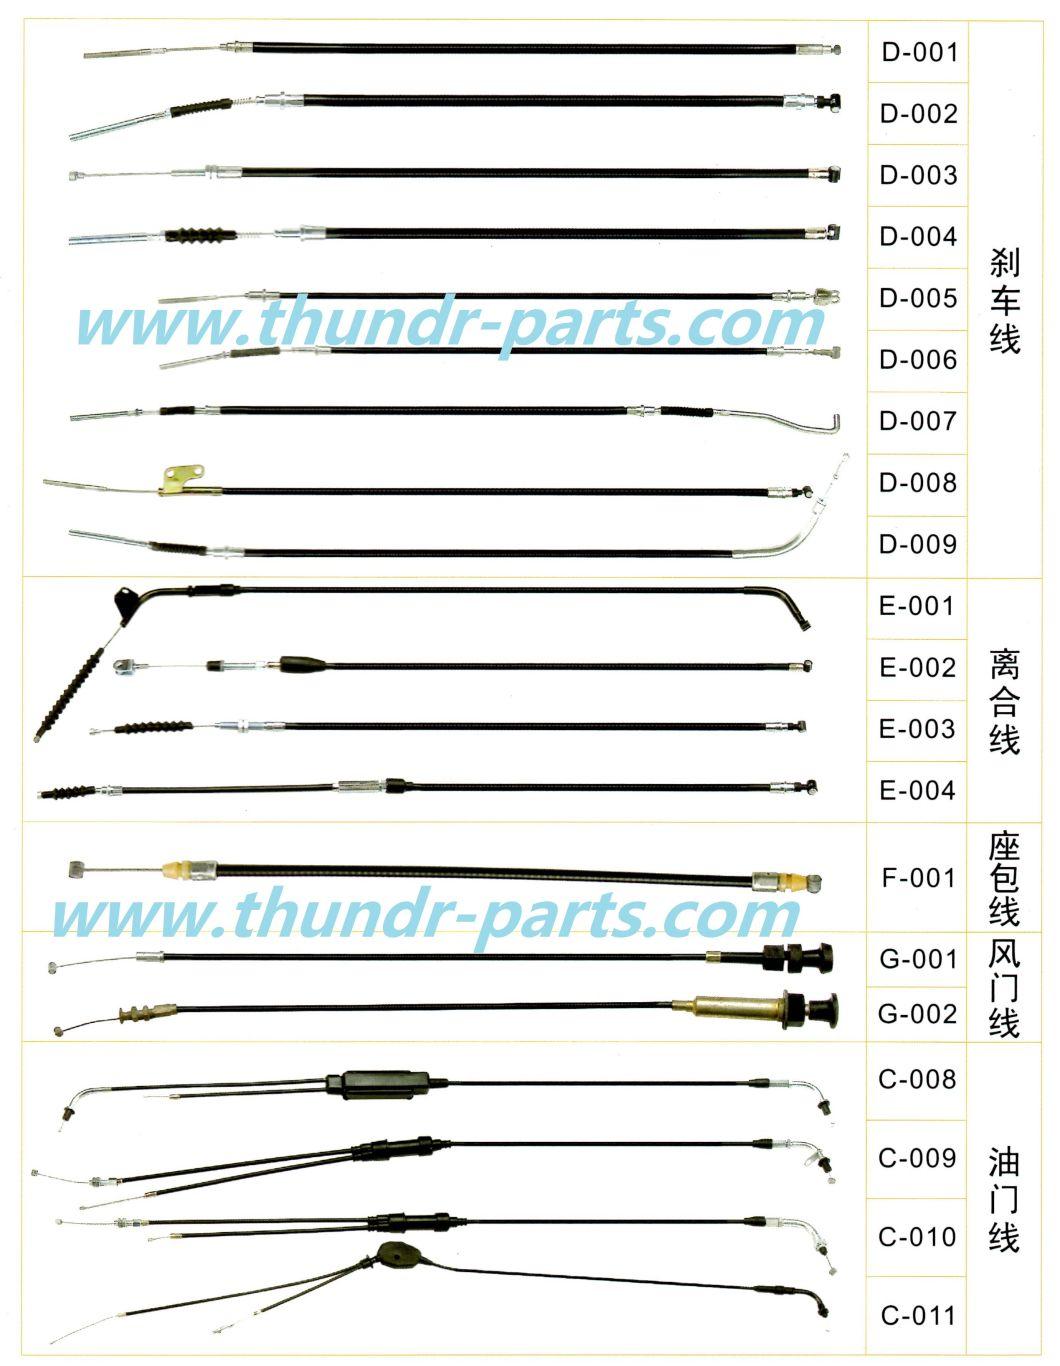 Cables/Guayas De Clutch/Freno/Metro/Gasolina/Spare Parts for Motorcycles XL125 XL185 XL200 Wave110 Wave125